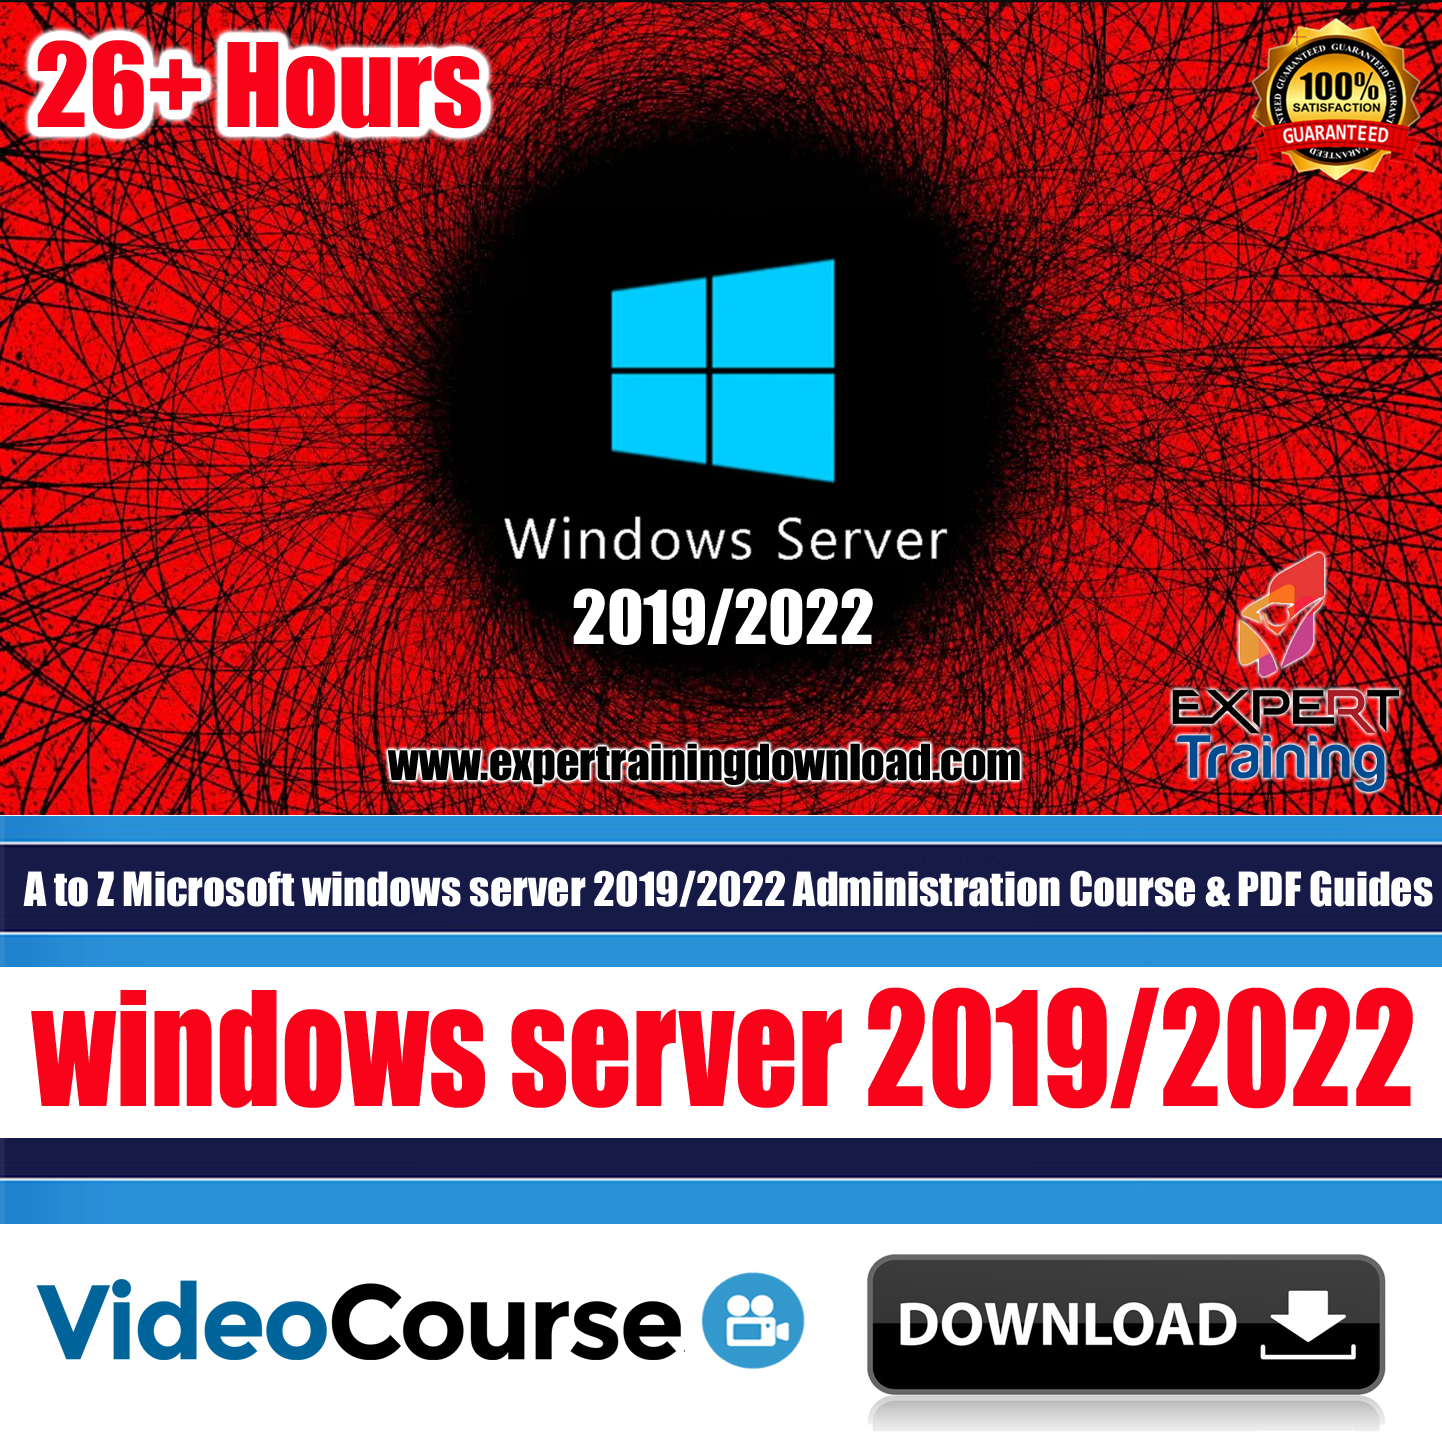 A to Z Microsoft windows server 2019-2022 Administration Course & PDF Guides